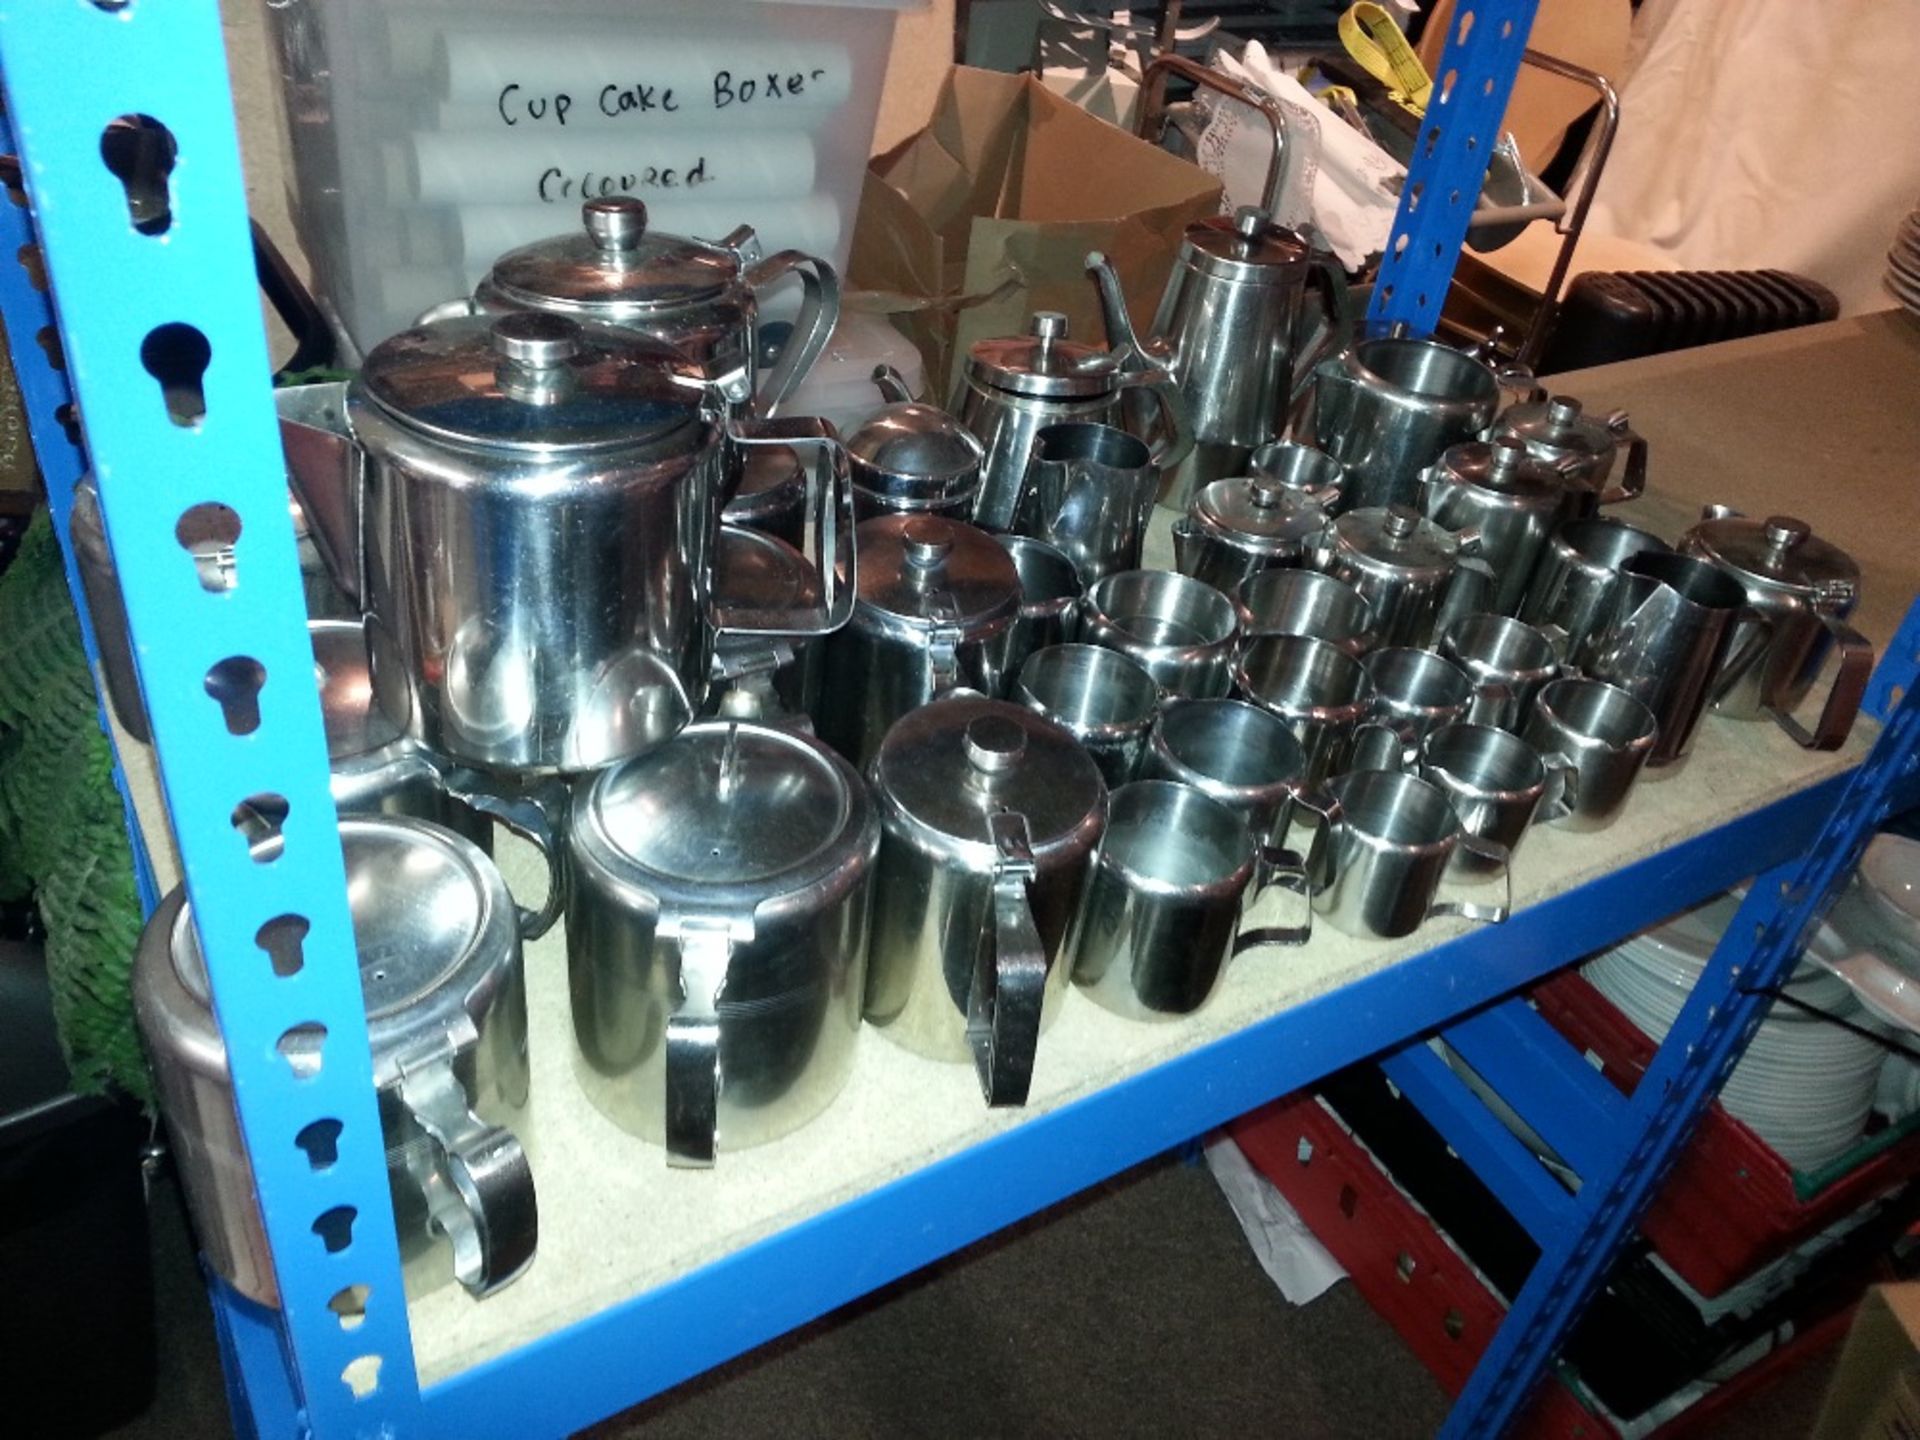 Massive selection of stainless steel tea/coffee pots, jugs etc